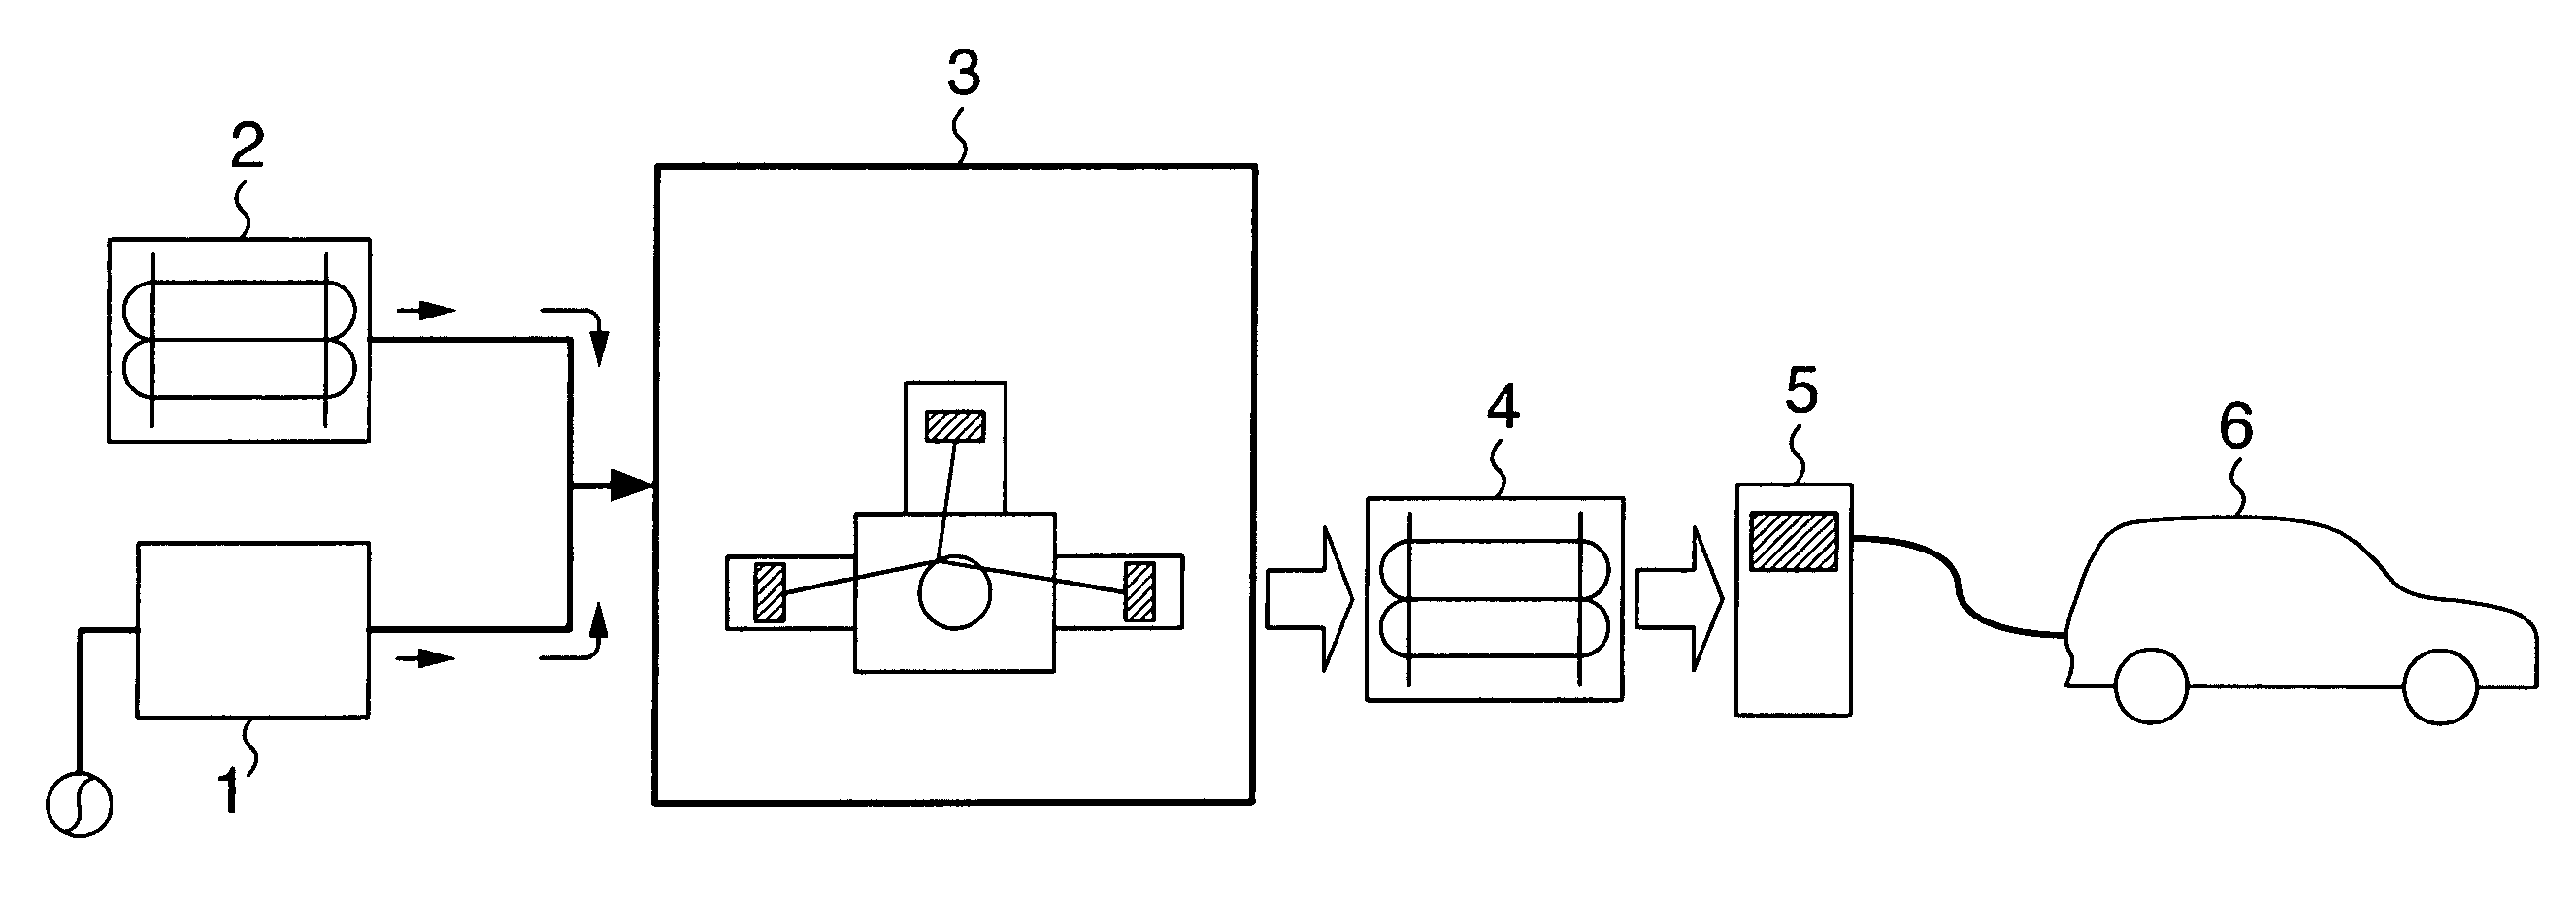 Hydrogen compressor system